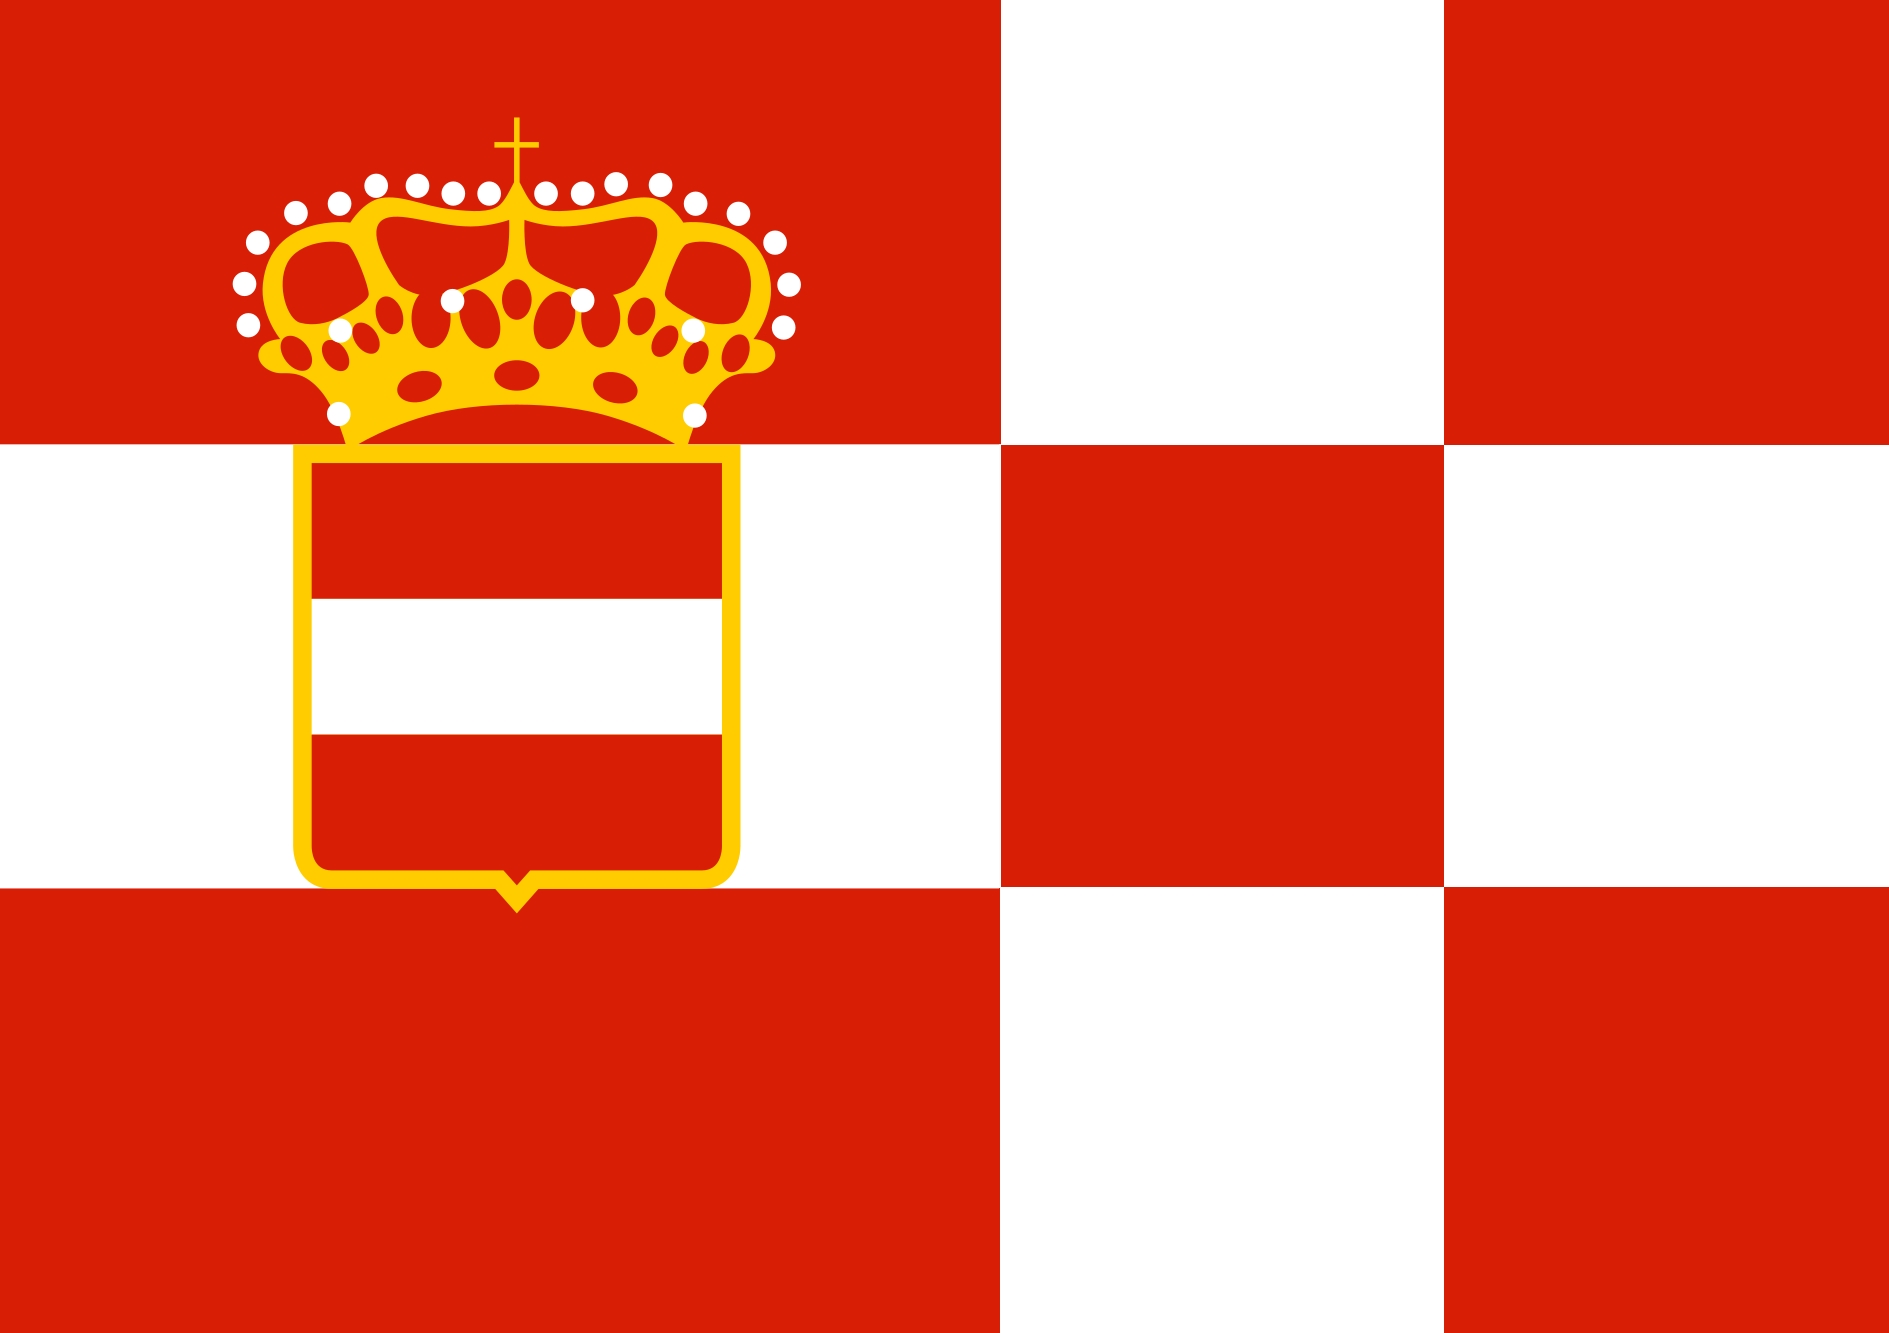 2000px-Flag_of_Austria-Hungary_(1869-1918).jpg